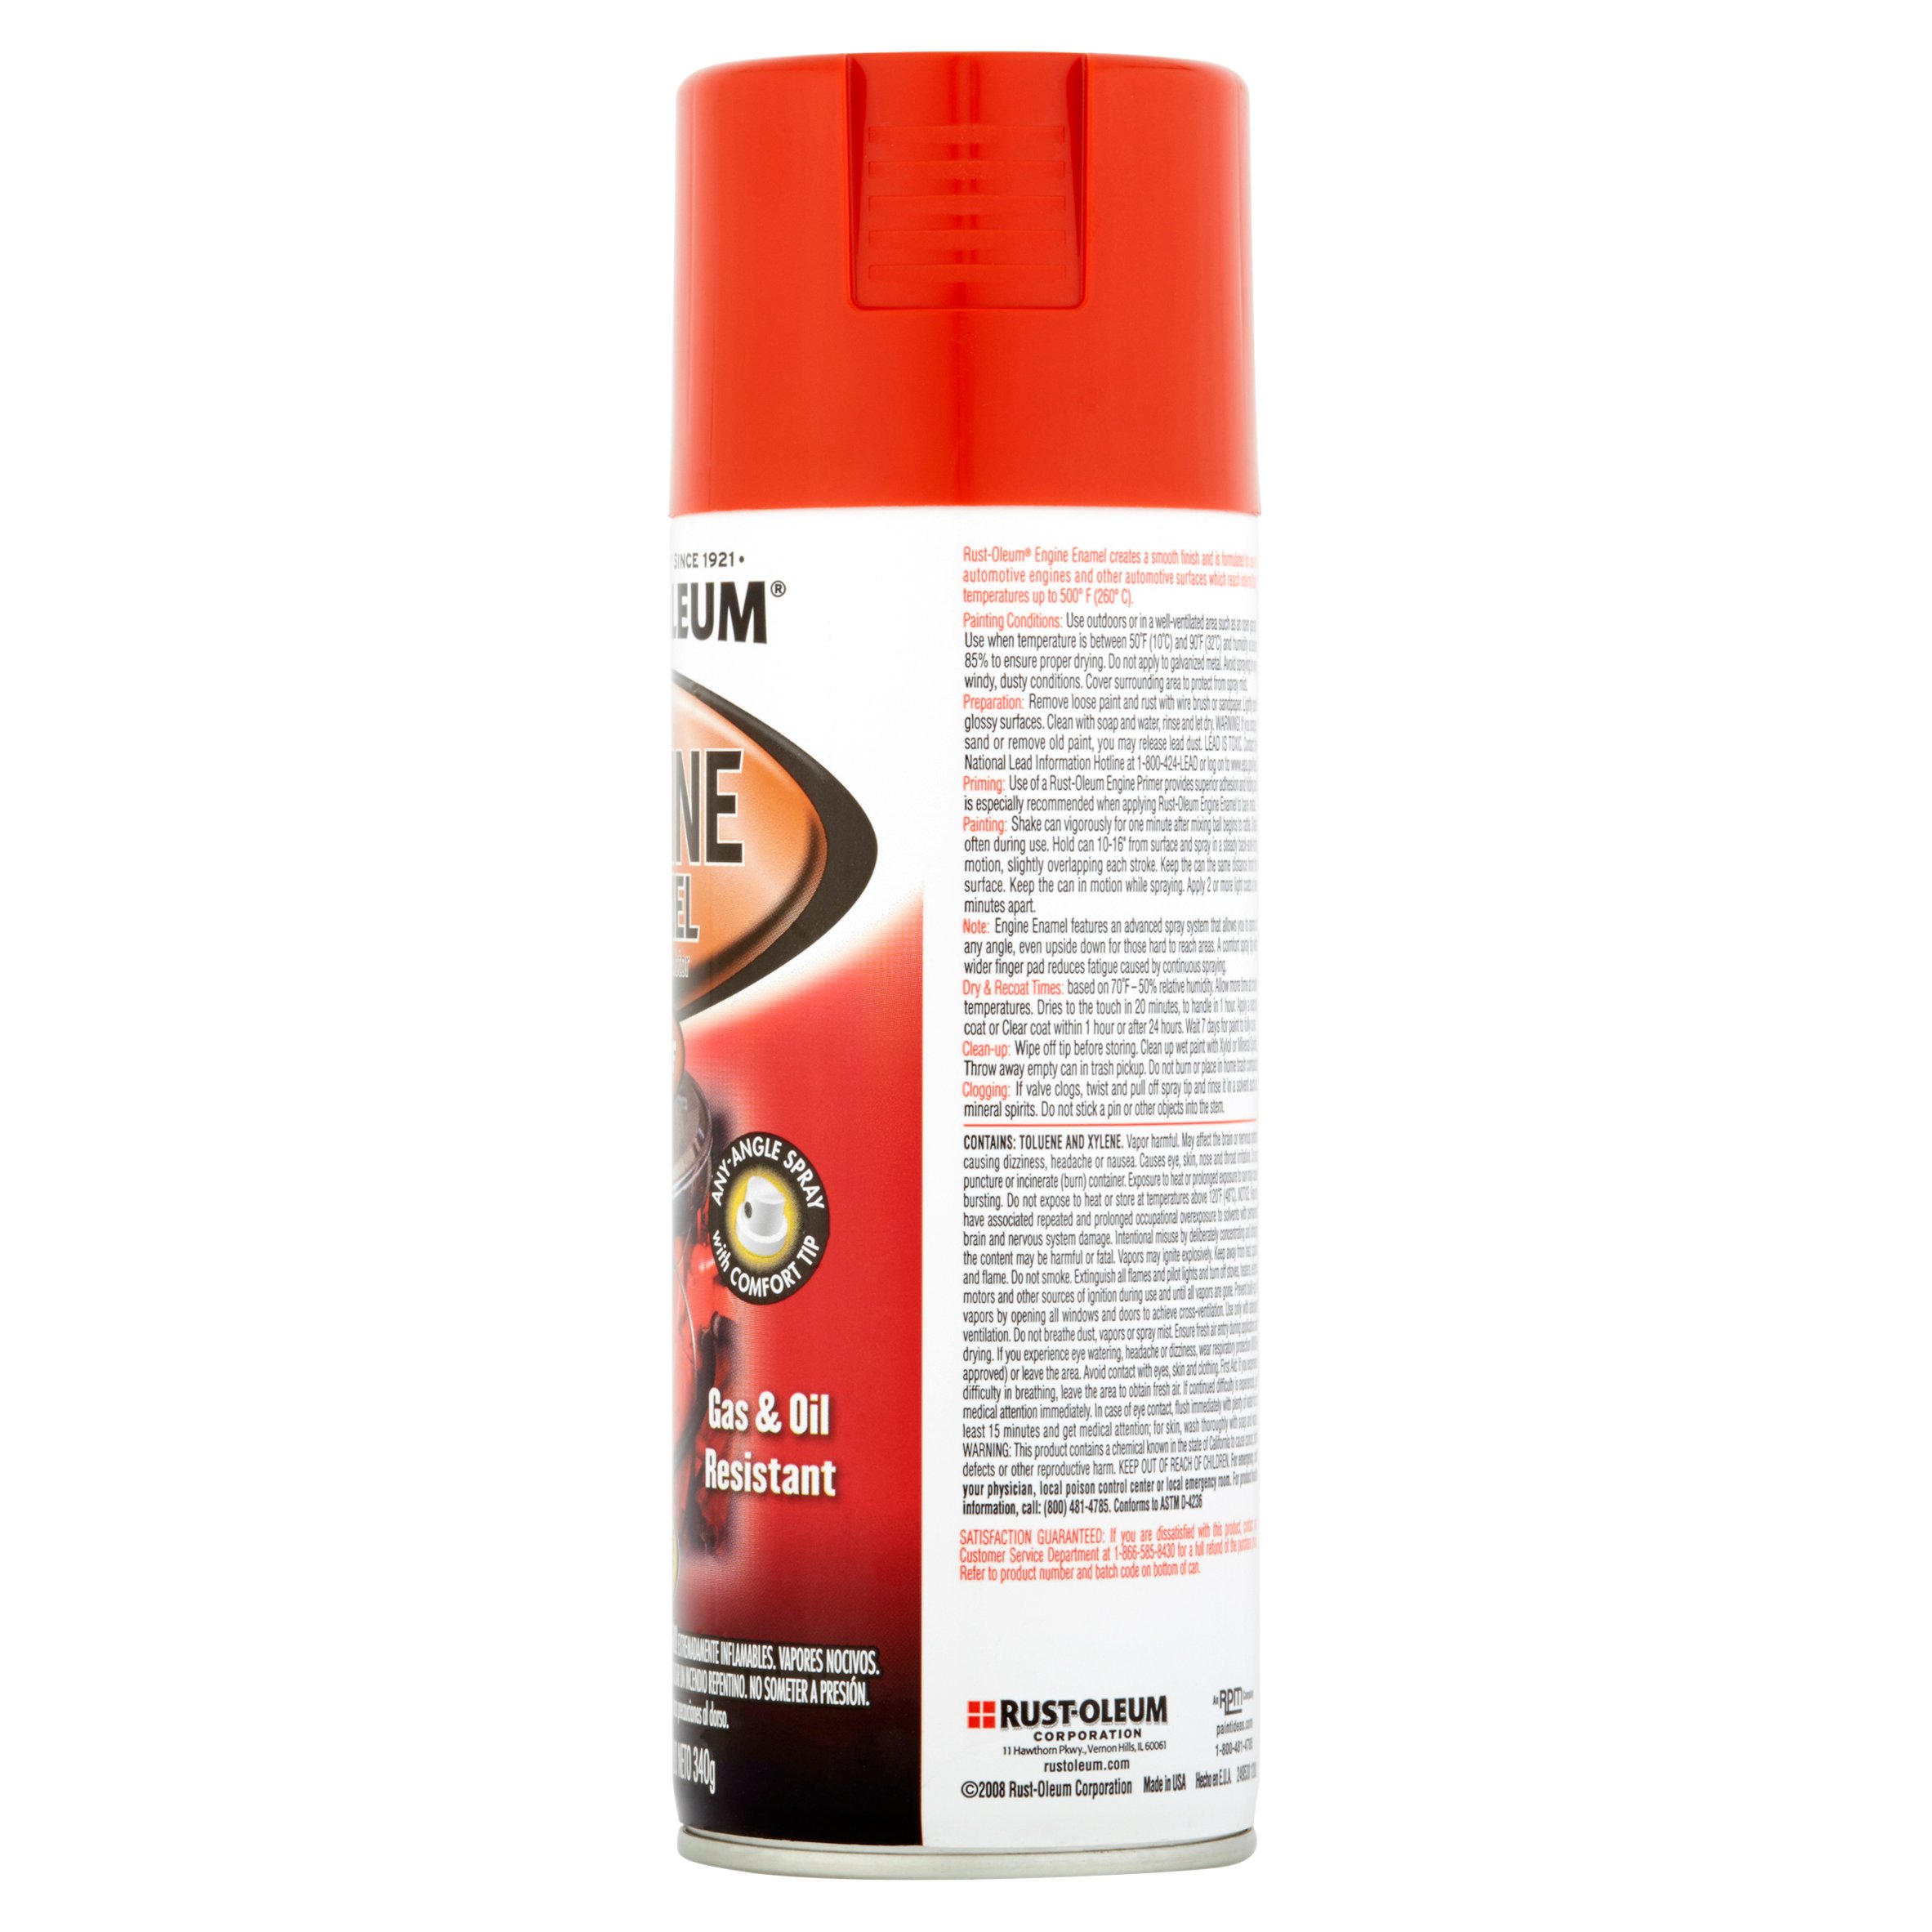 Enamel Spray Paint 500 ml (Red, Black, White, Silver, Golden) - UE Autotech